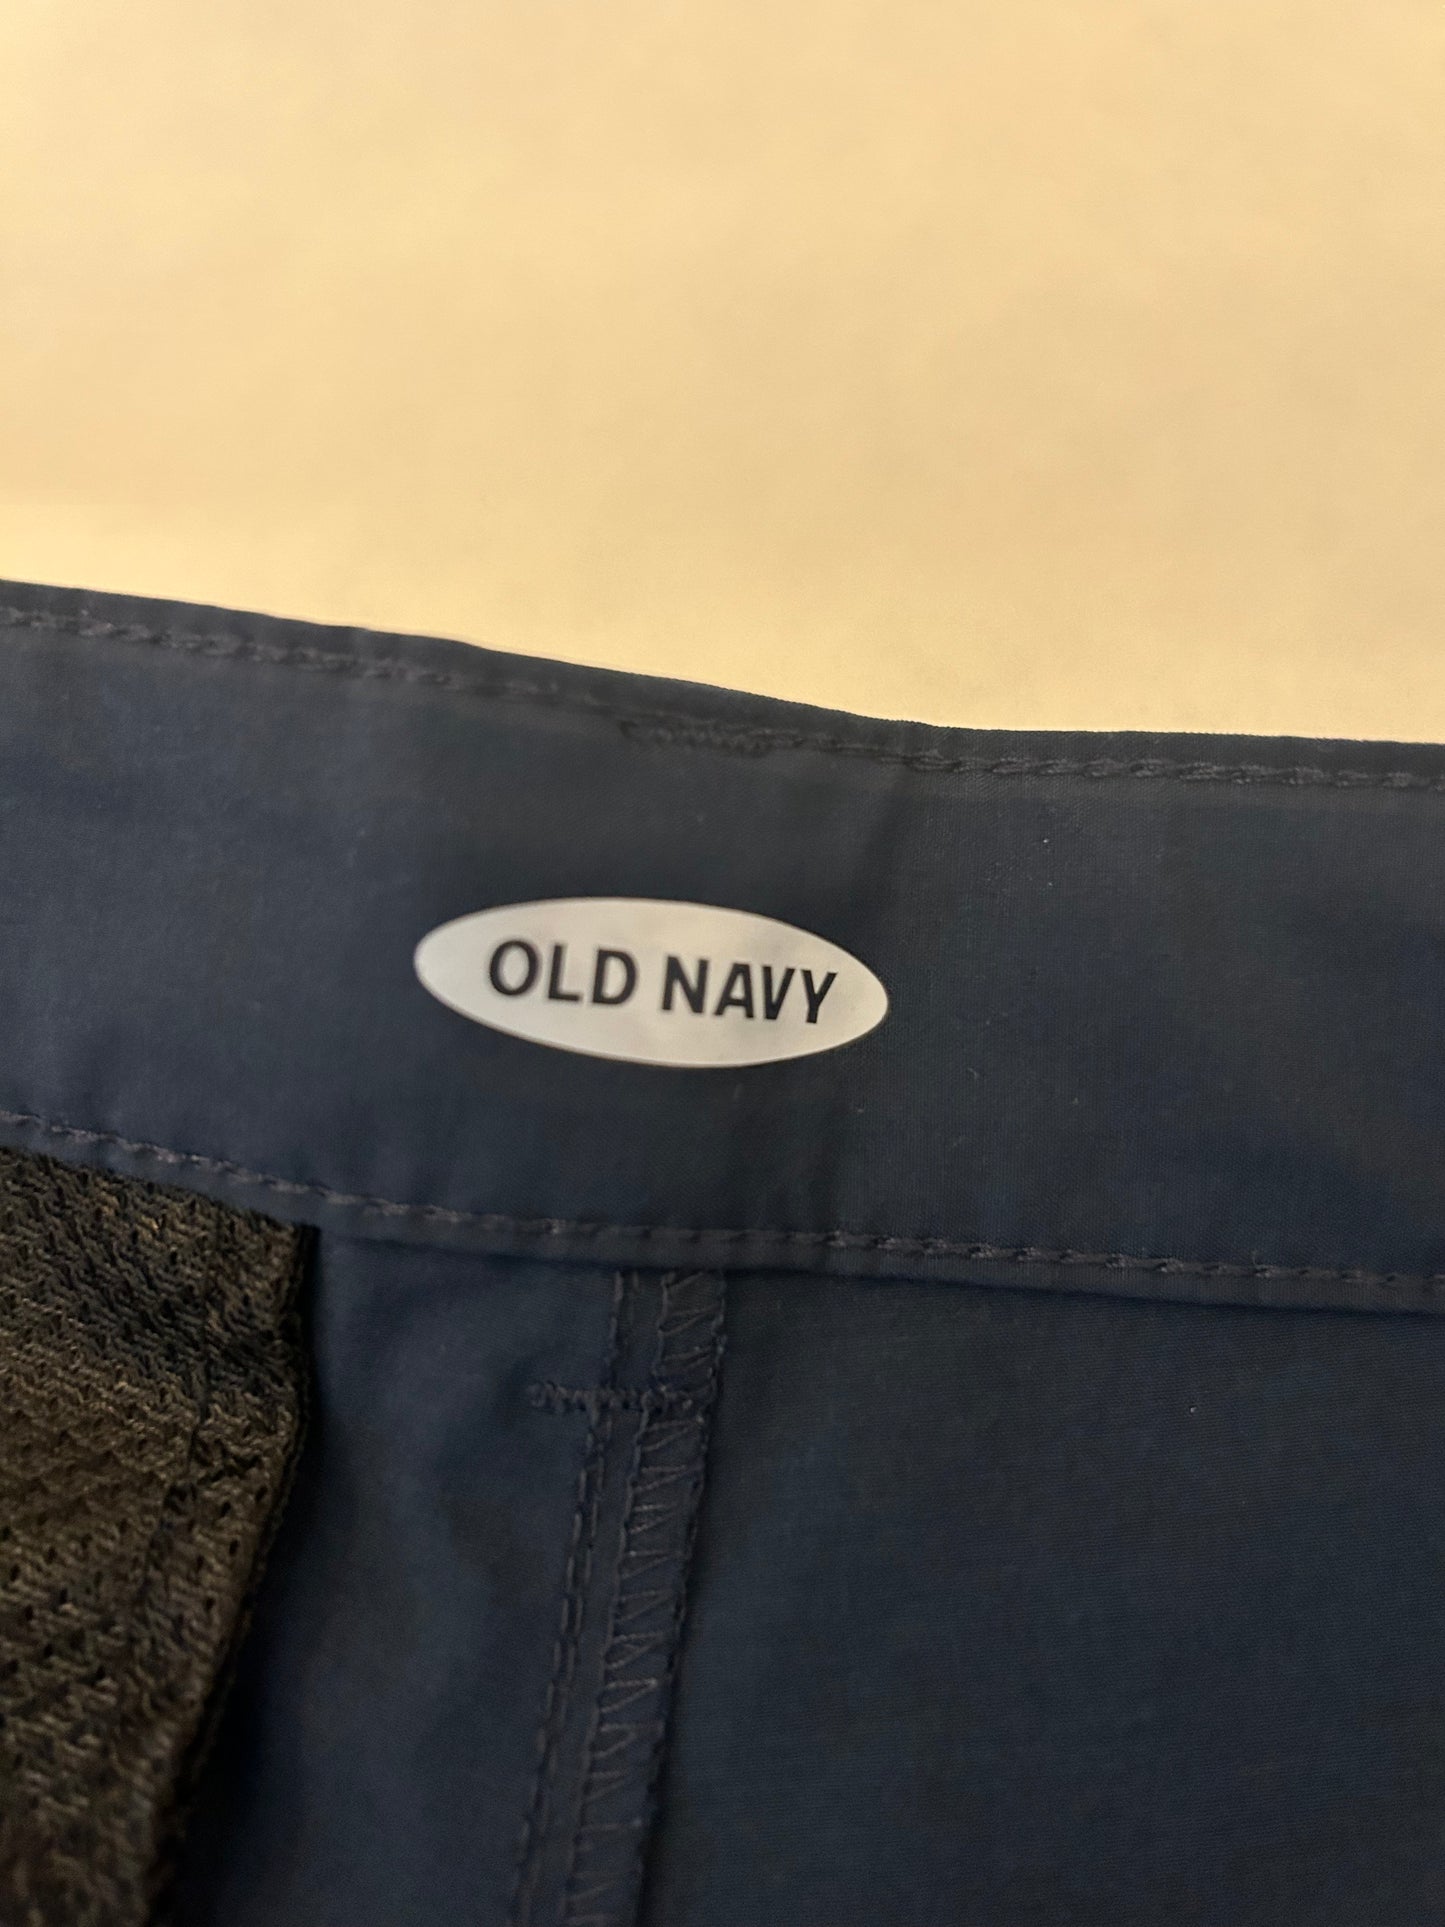 Boys size 12 Old Navy Dry Fit Navy shorts